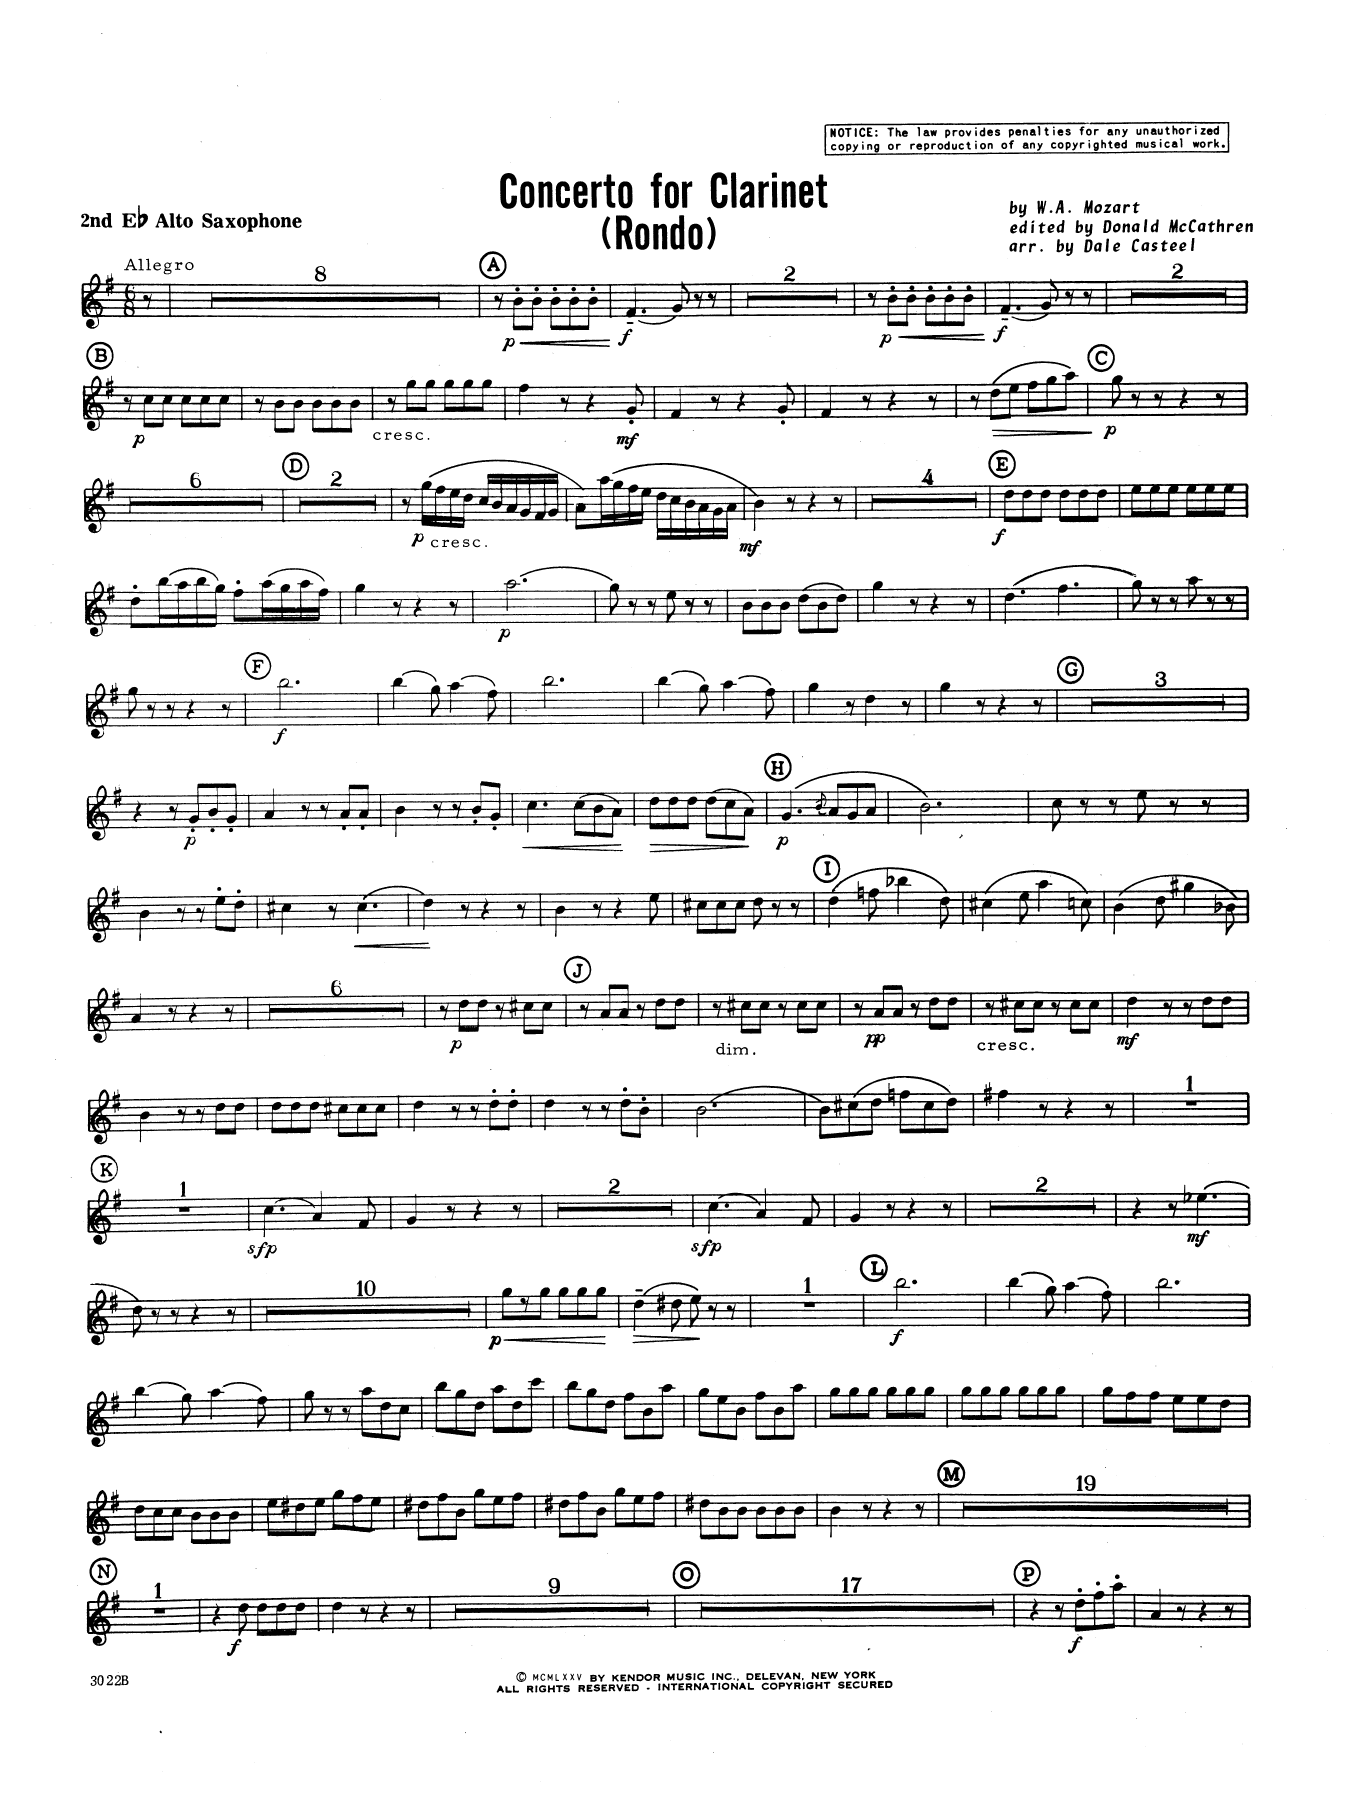 Concerto For Clarinet - Rondo (3rd Movement) - K.622 - 2nd Eb Alto Saxophone (Concert Band) von Donald McCathren and Dale Casteel